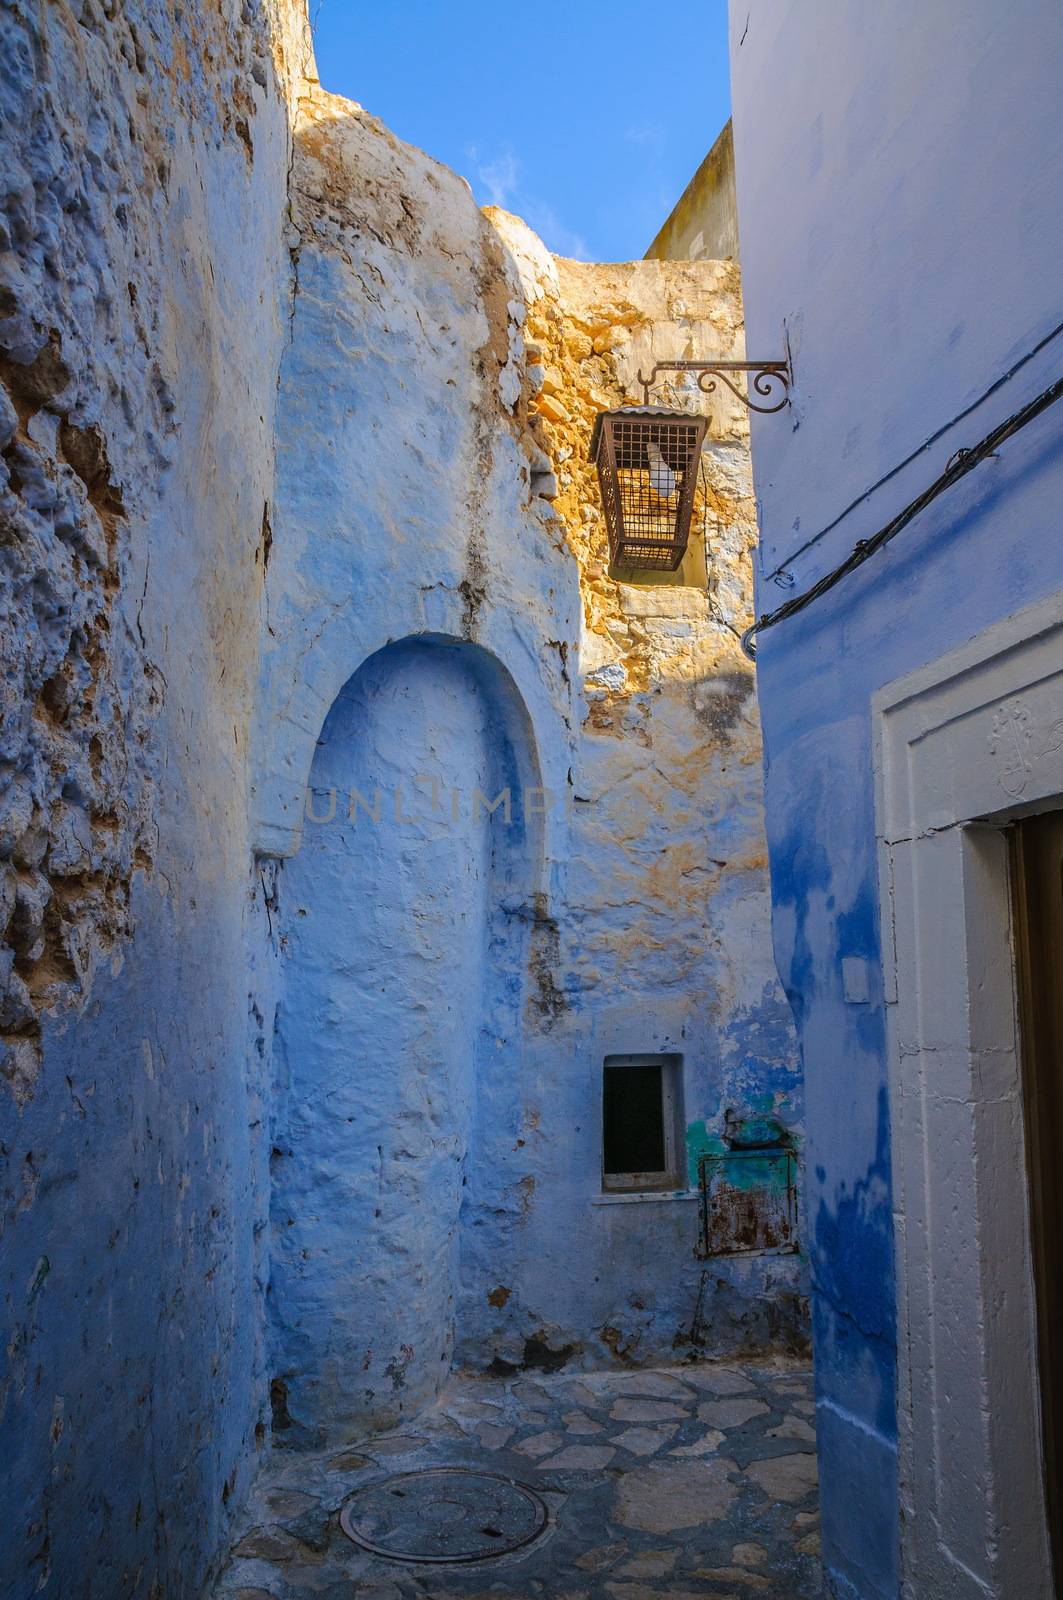 Oriental narrow street with blue houses in Medina, Hammamet Tunisia by Eagle2308